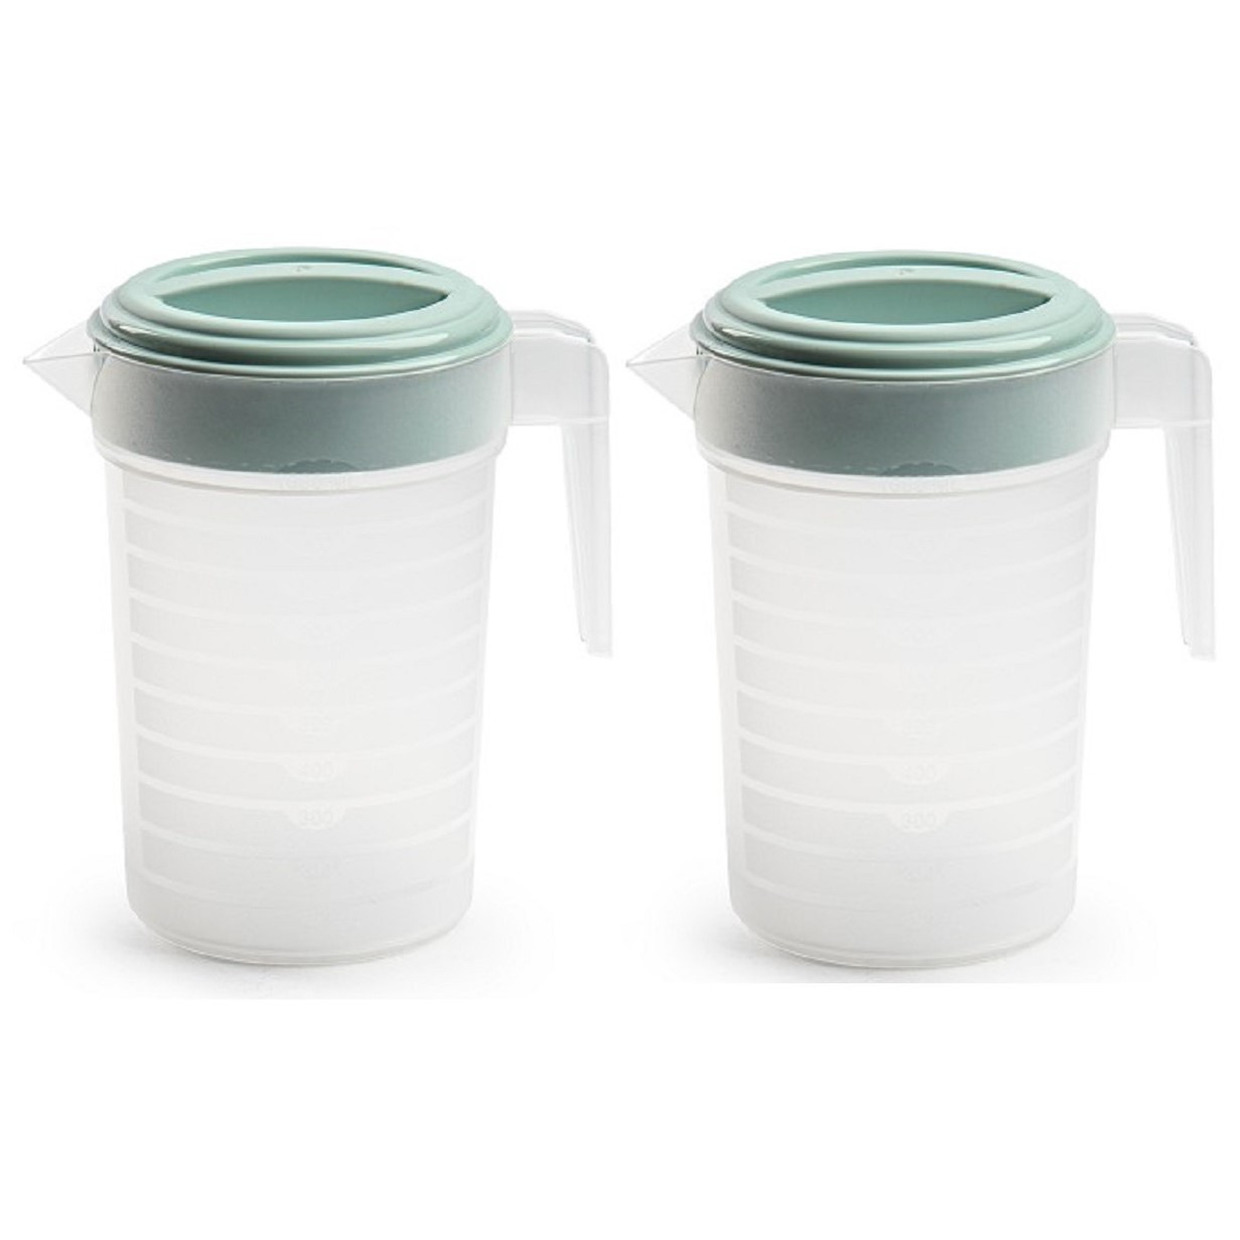 PlasticForte 2x stuks waterkan/sapkan transparant/mintgroen met deksel 1 liter kunststof -